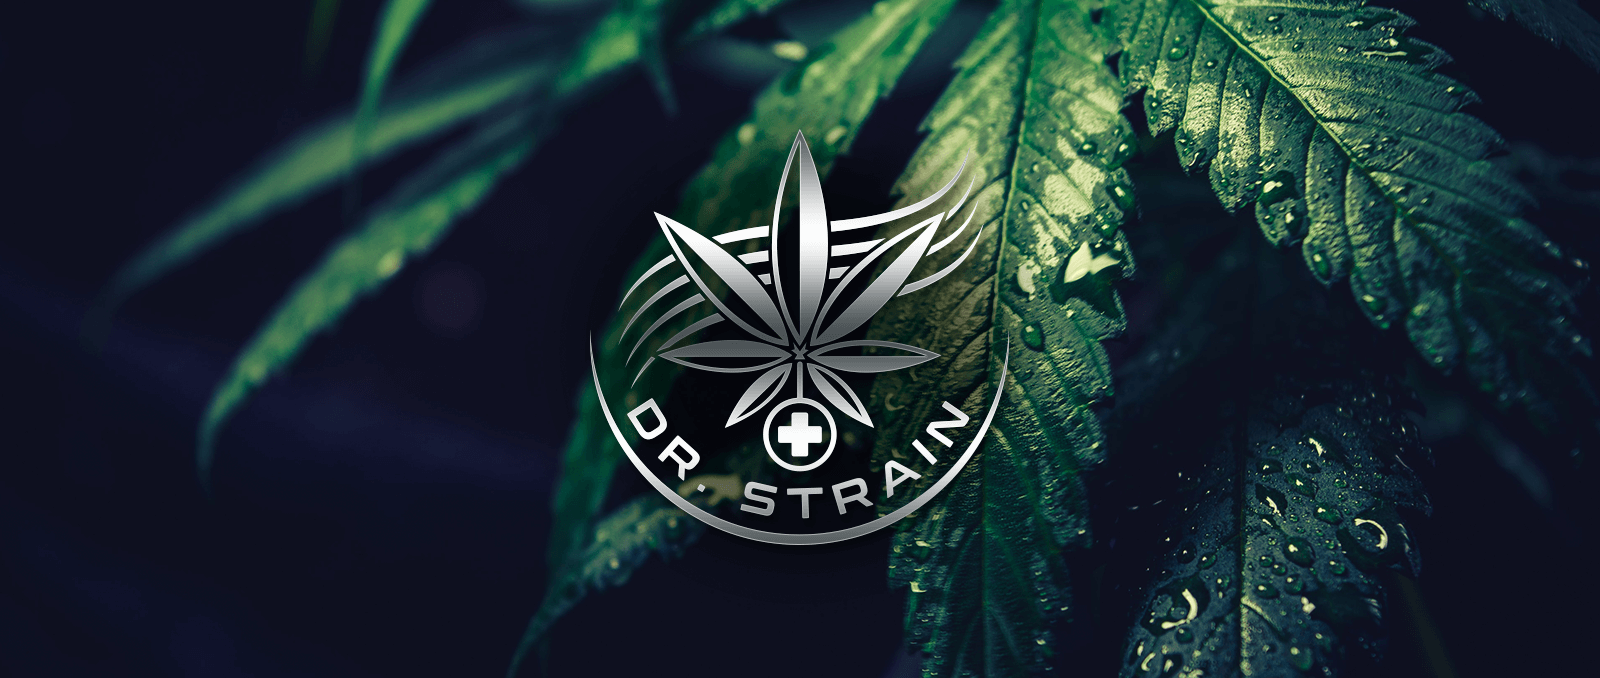 dr-g-strain-banner-1